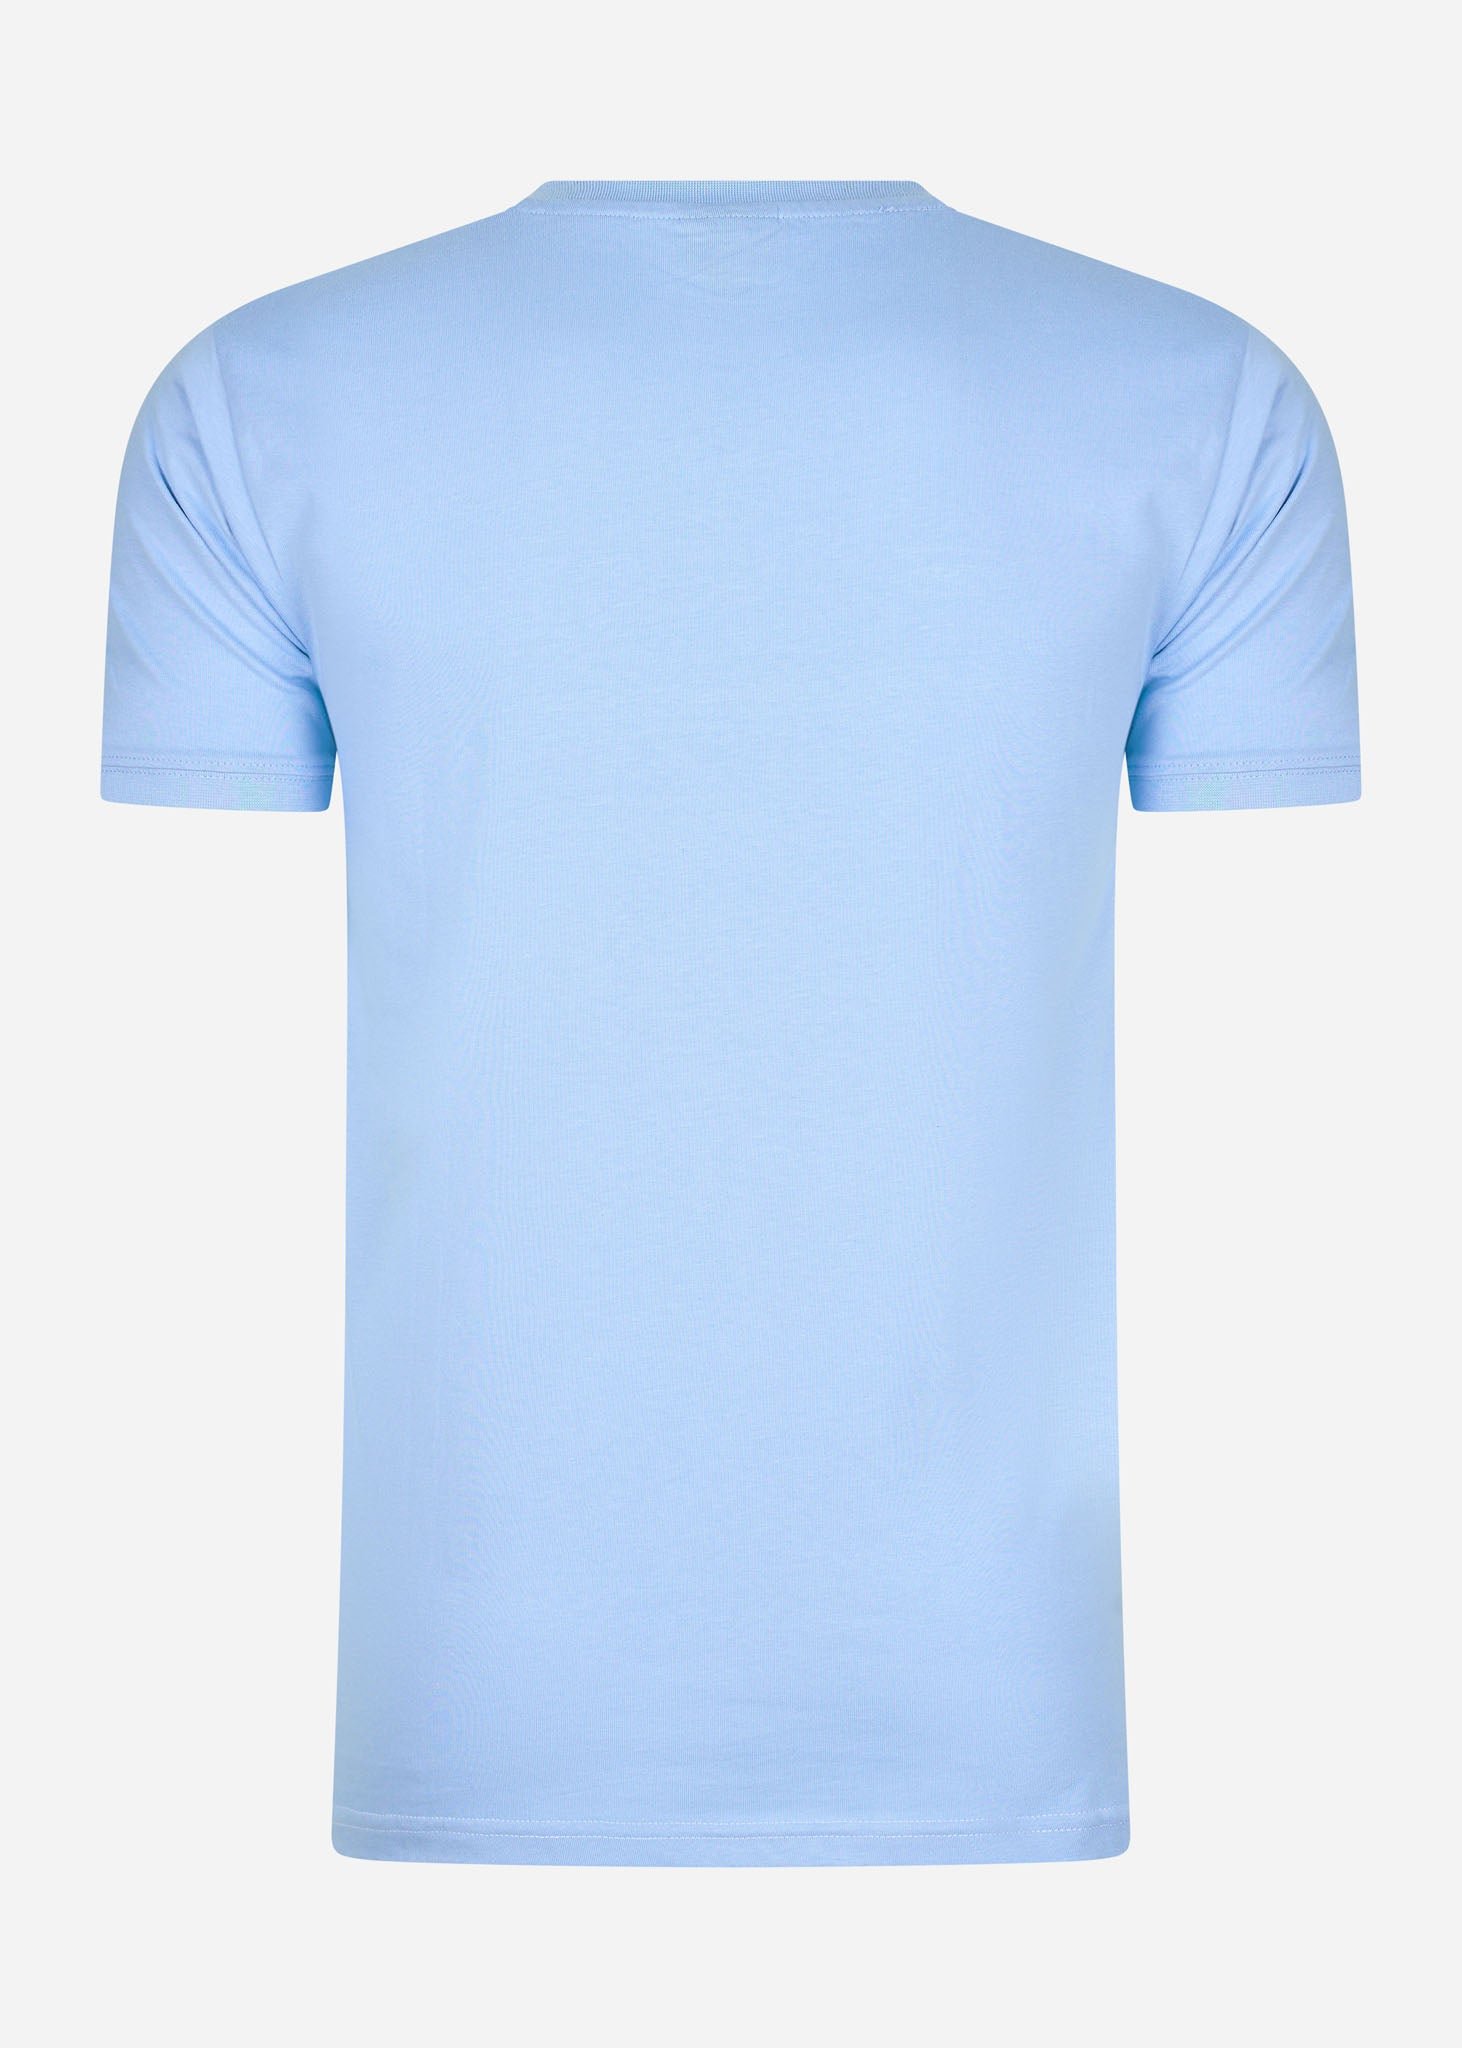 Ellesse T-shirts  Venire tee - light blue white navy 